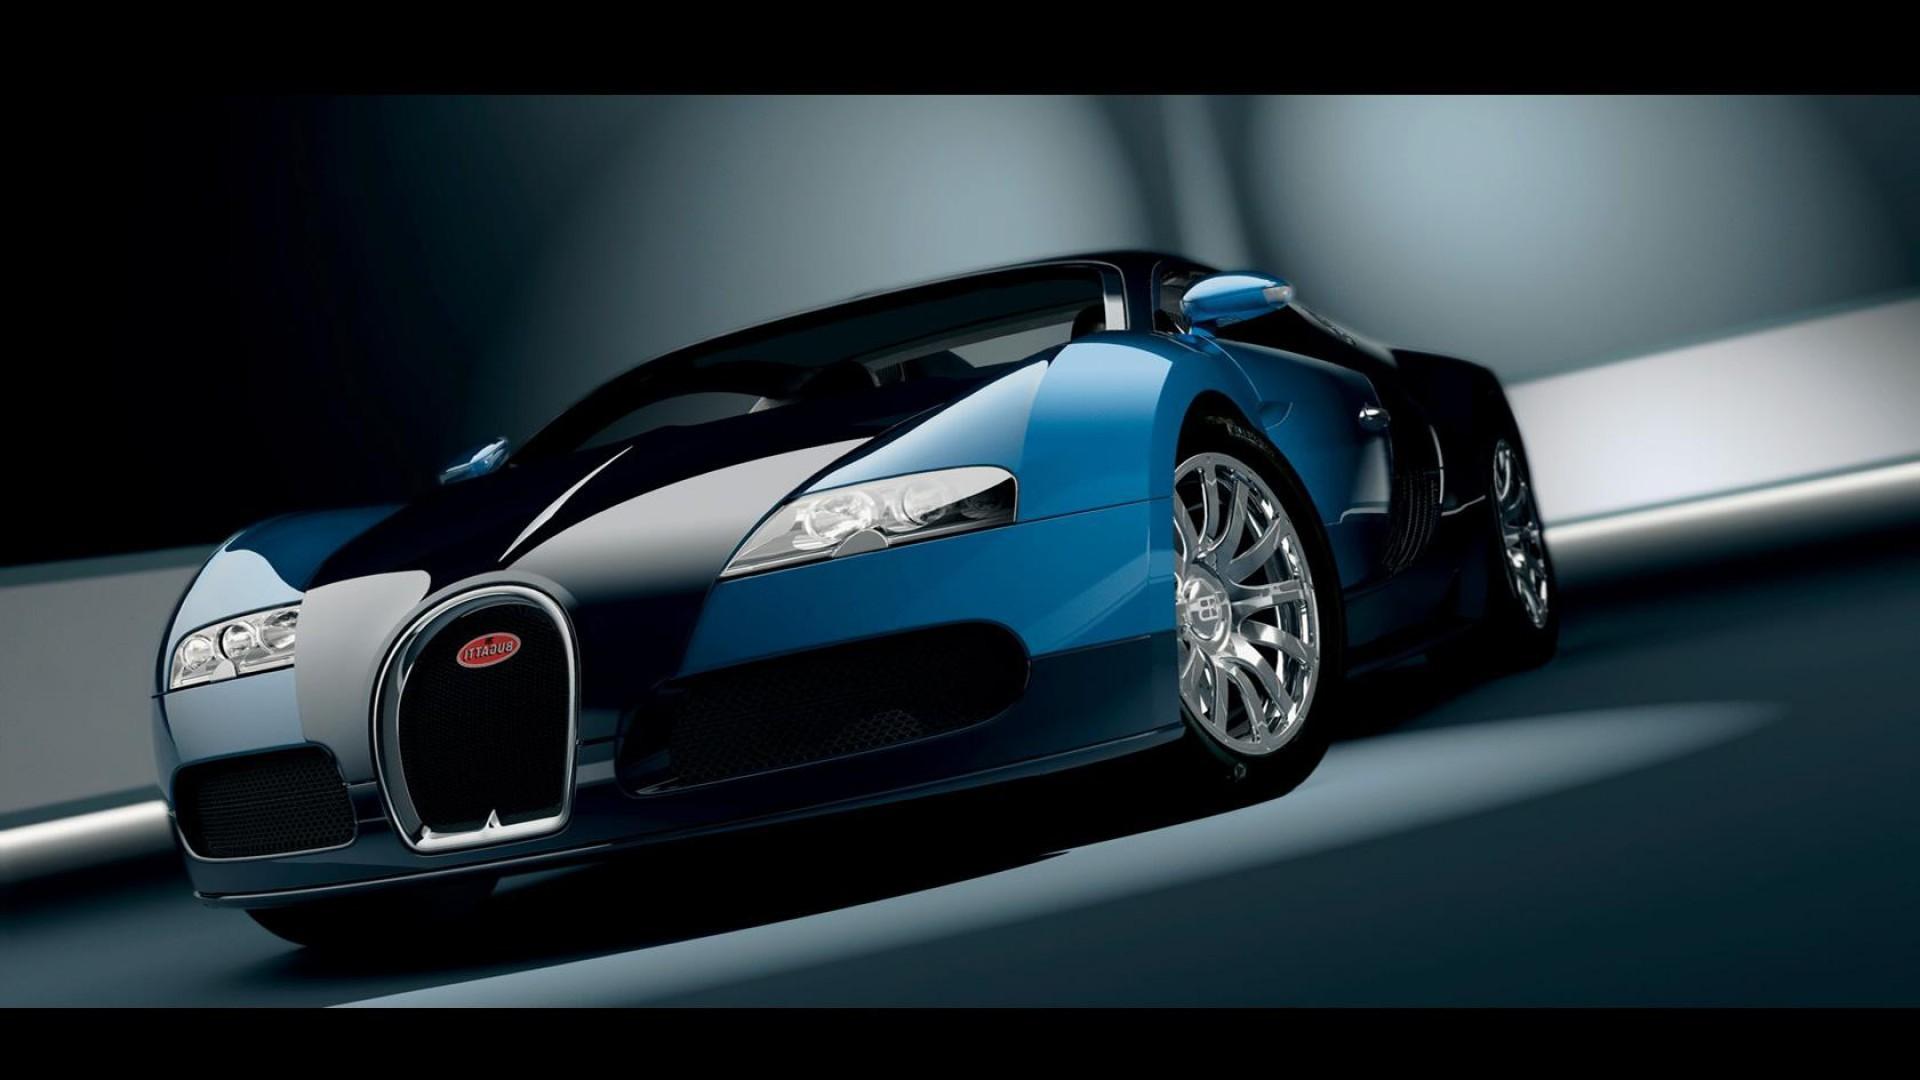 Bugatti Veyron Wallpaper High Quality